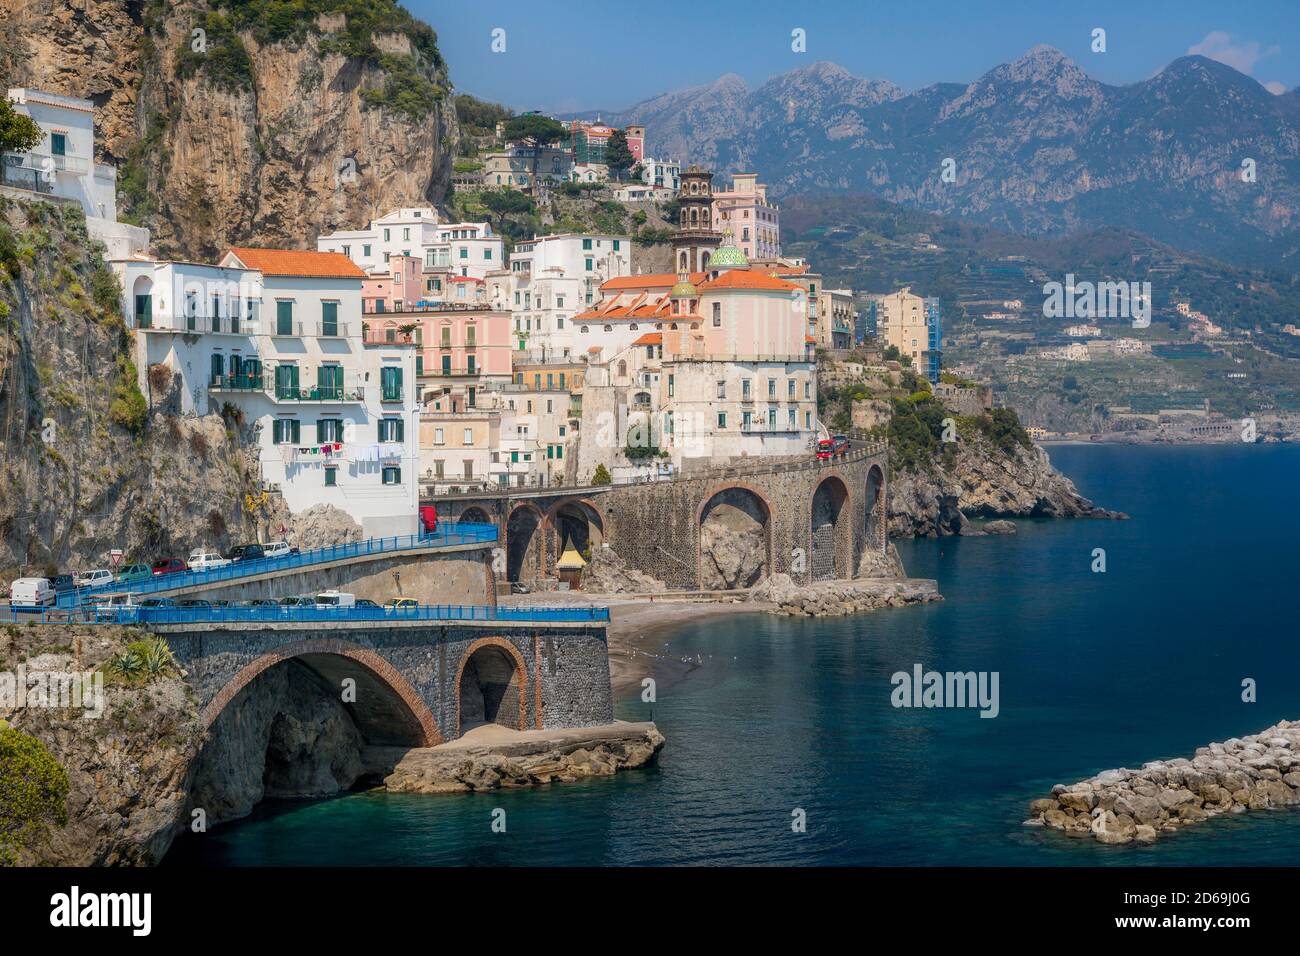 Seaside Town von Atrani in der Nähe von Amalfi, Kampanien, Italien Stockfoto